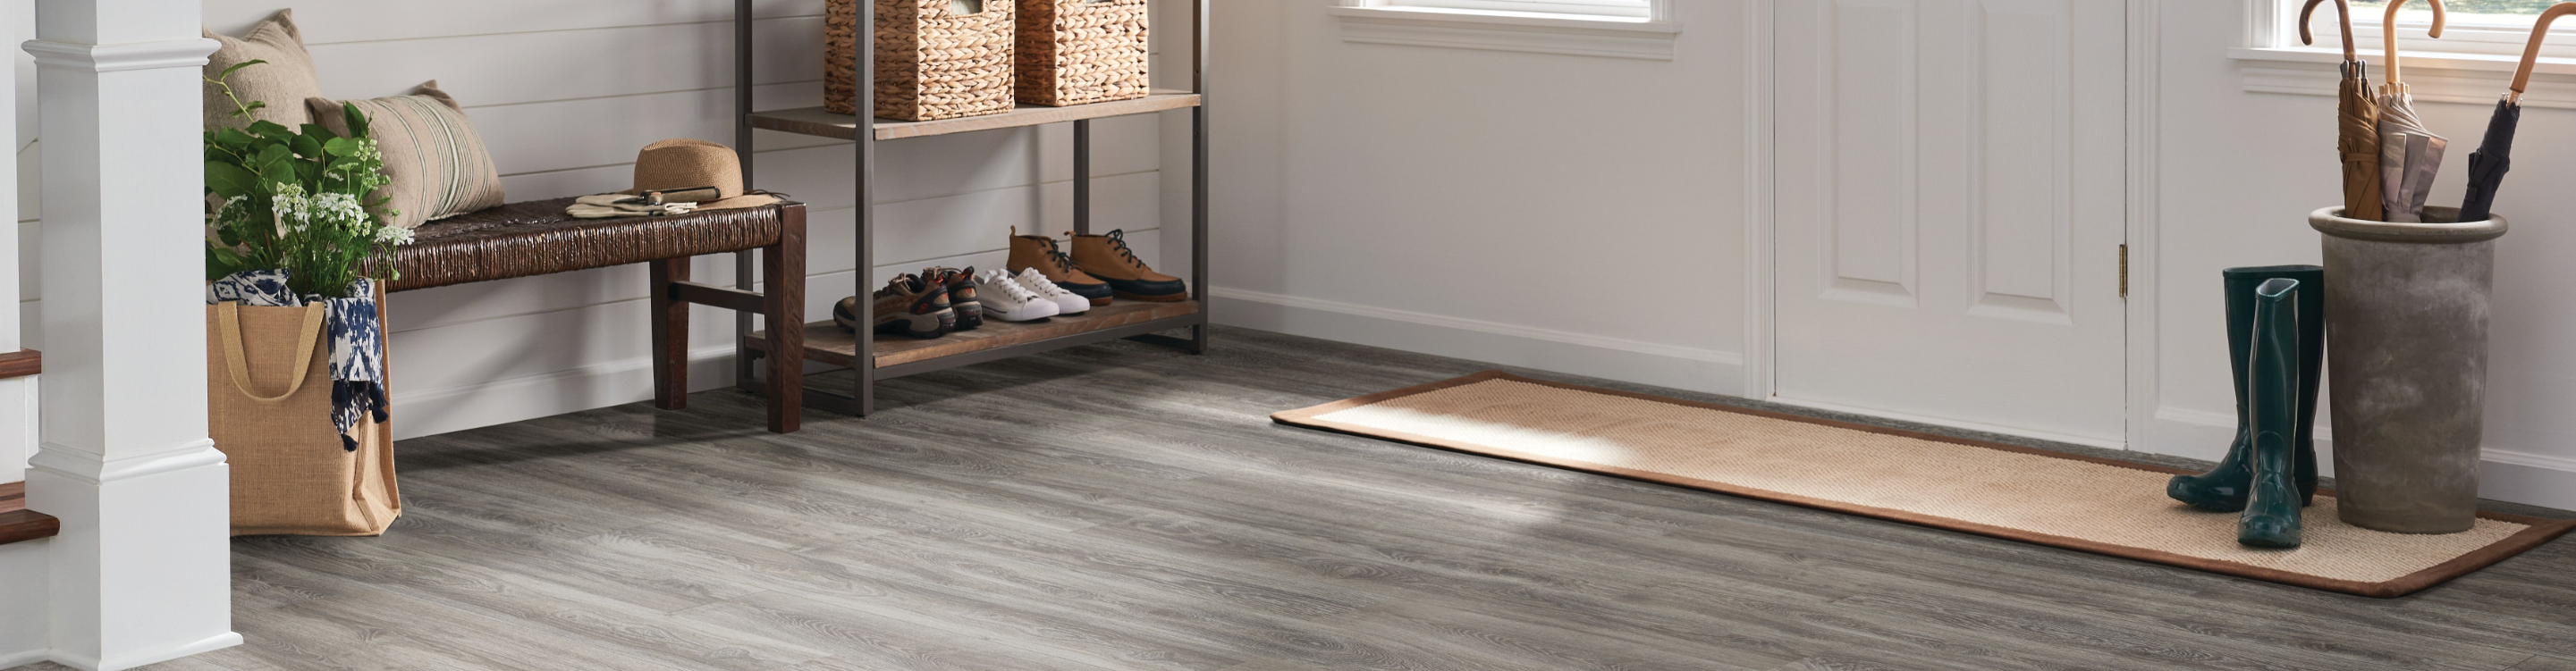 gray vinyl plank floor in entryway